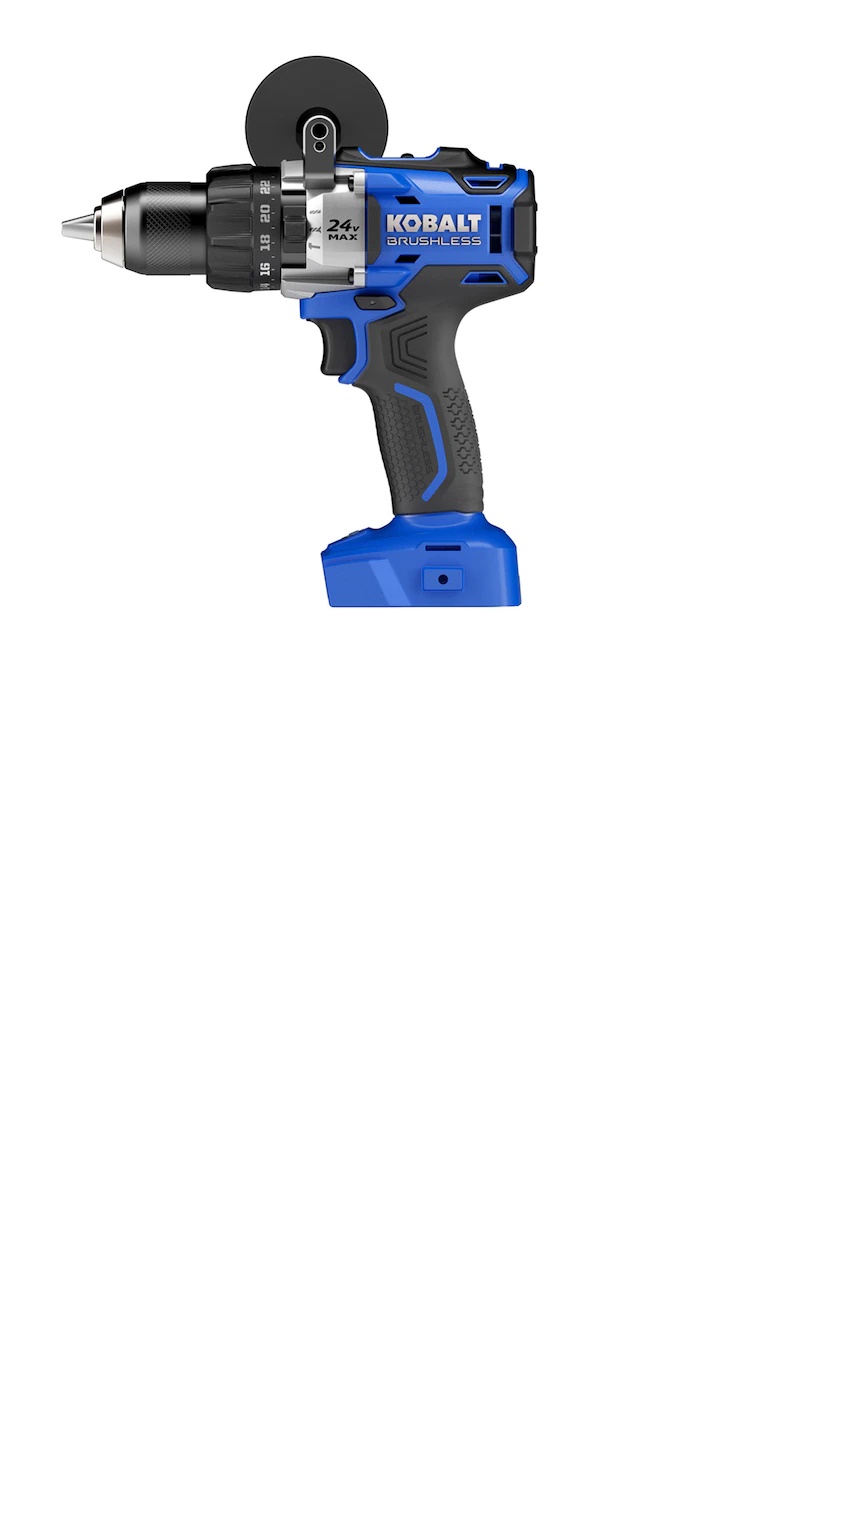 Kobalt  1/2-in 24-volt Max Variable Speed Brushless Cordless Hammer Drill (Tool Only) $79